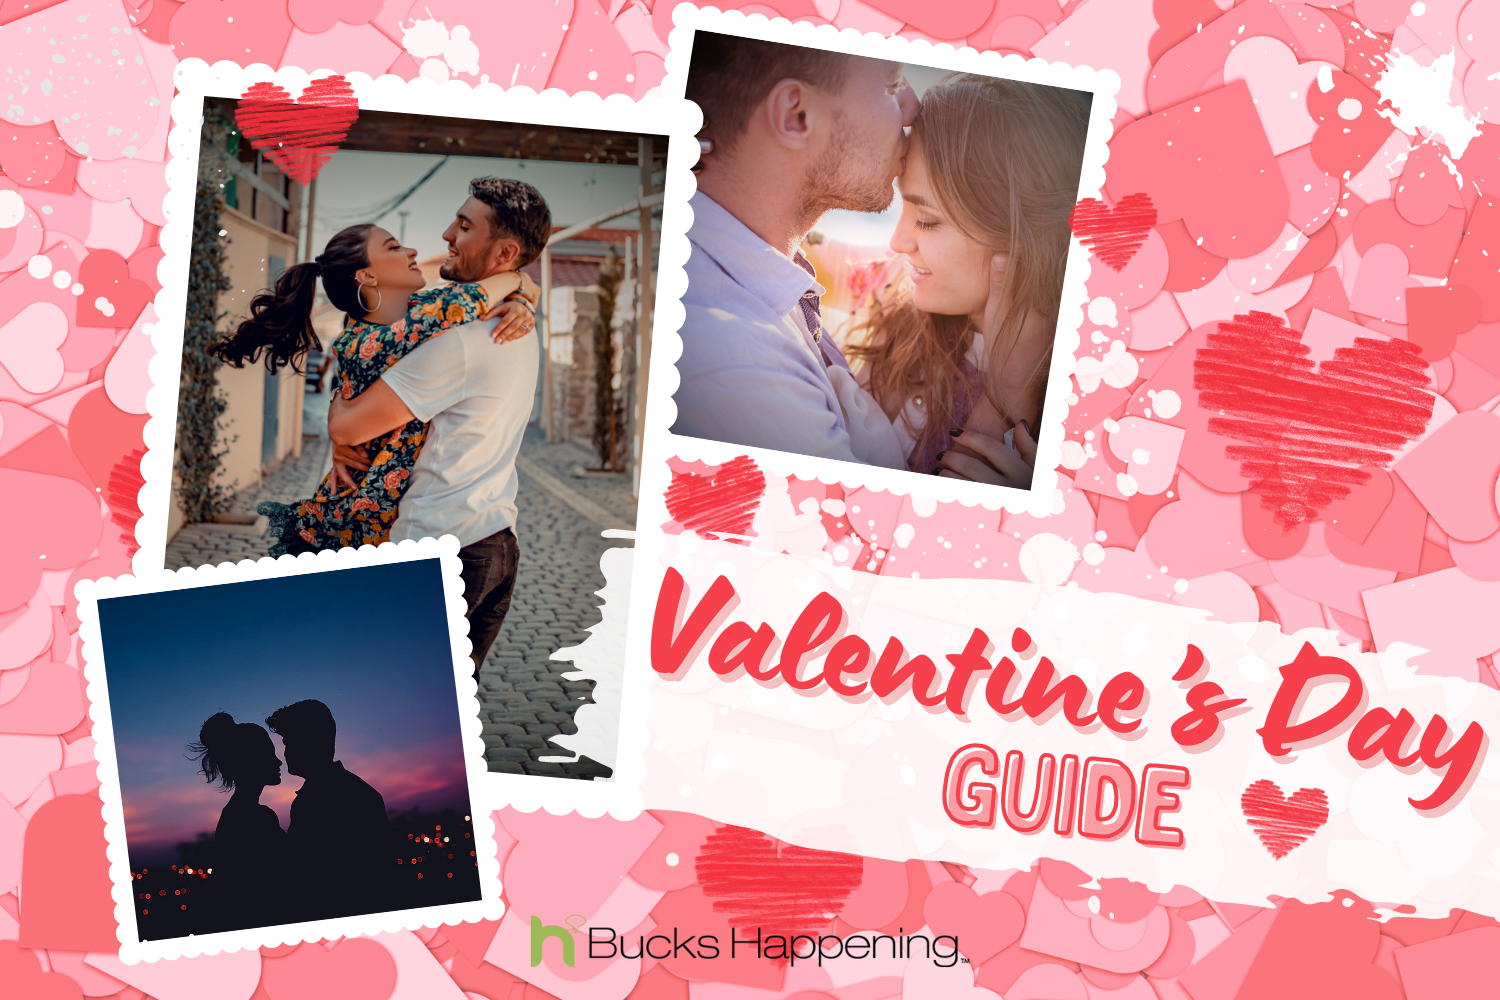 Bucks Valentine's Day Guide